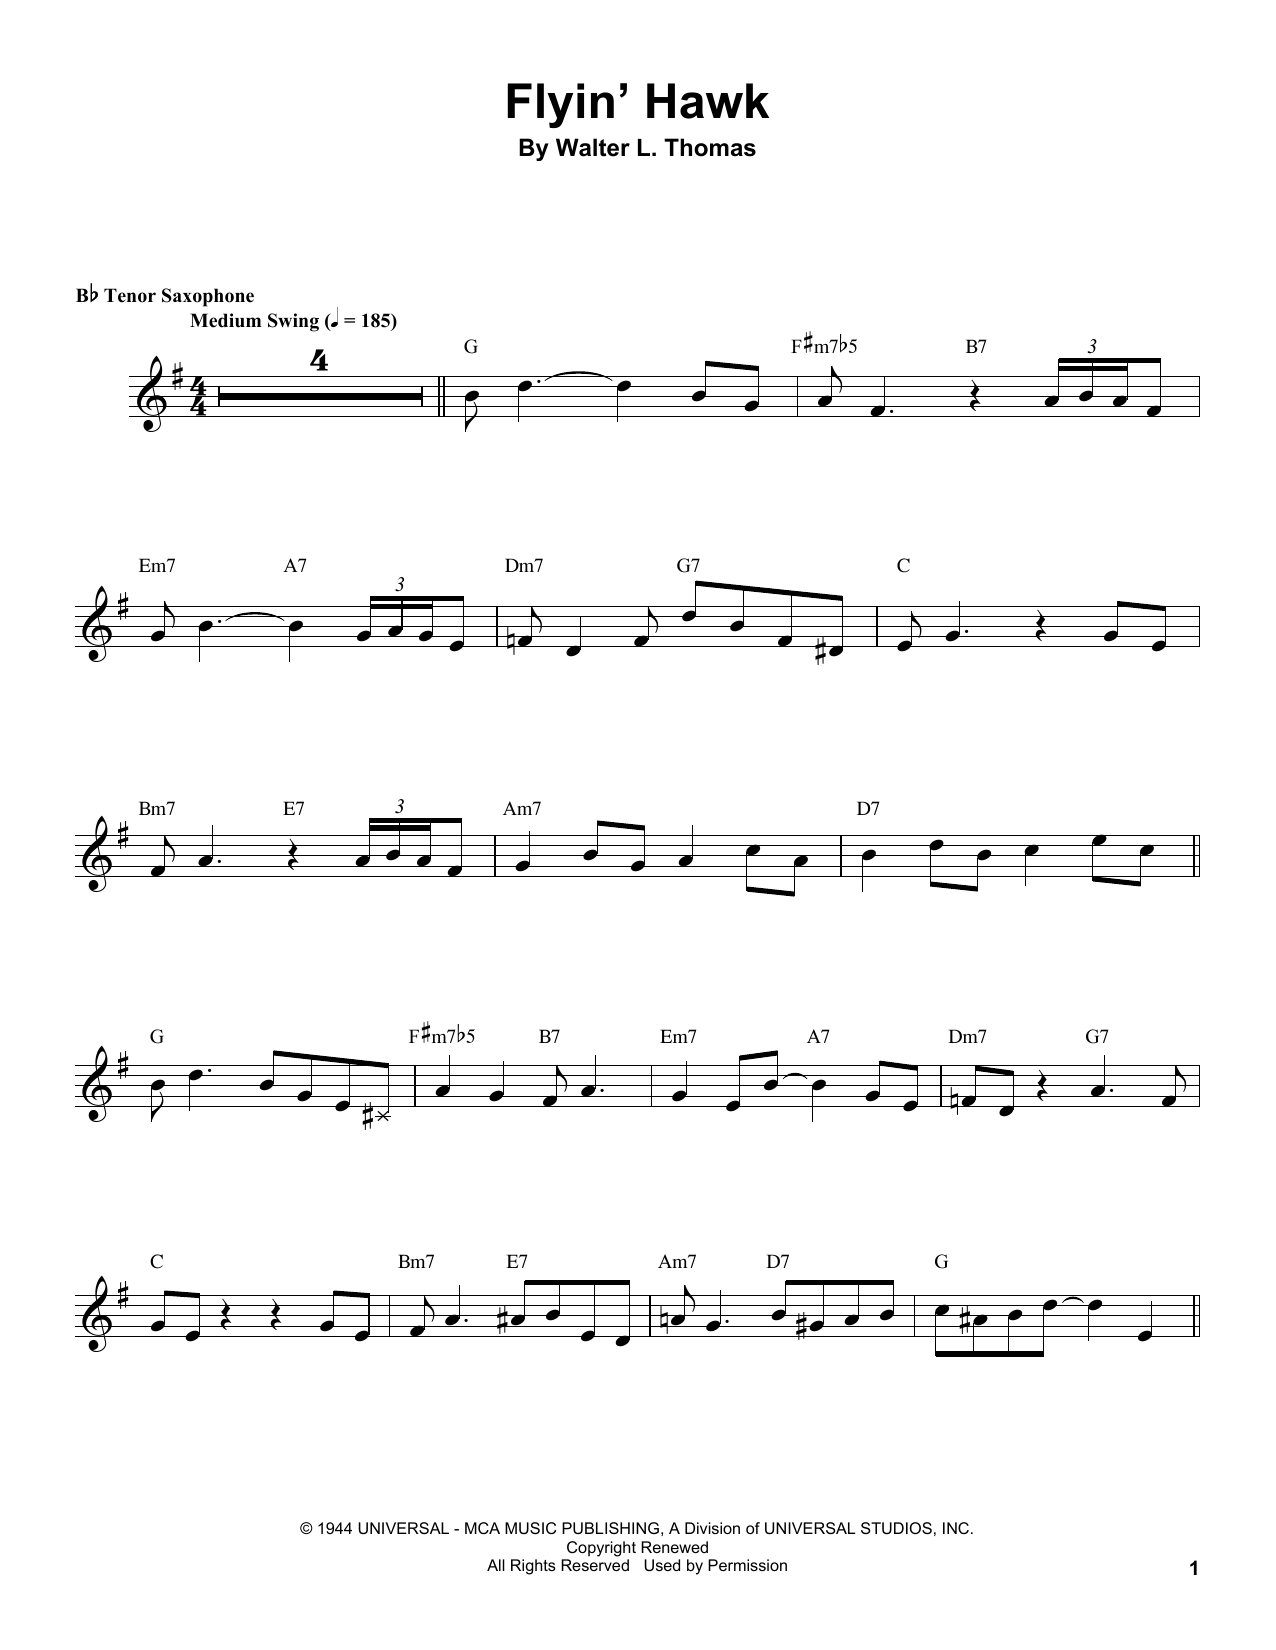 Coleman Hawkins Flyin' Hawk Sheet Music Notes & Chords for Tenor Sax Transcription - Download or Print PDF